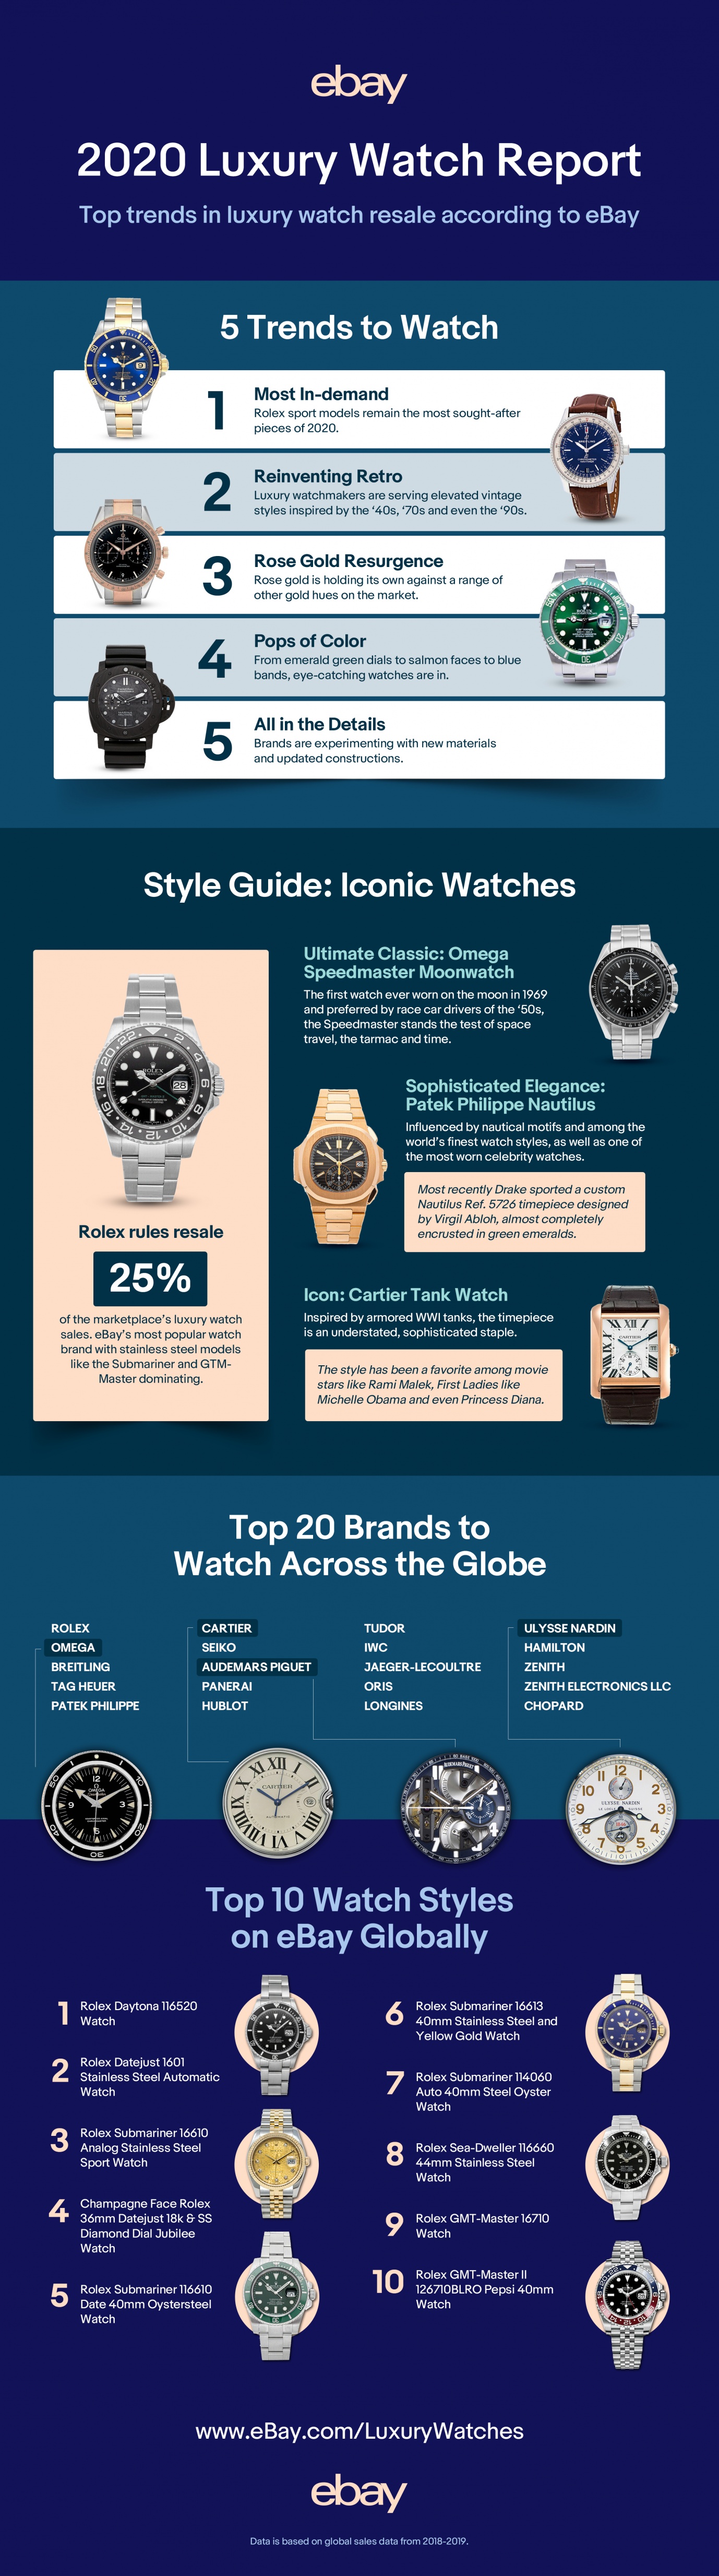 ebay watch infographic 2020 300